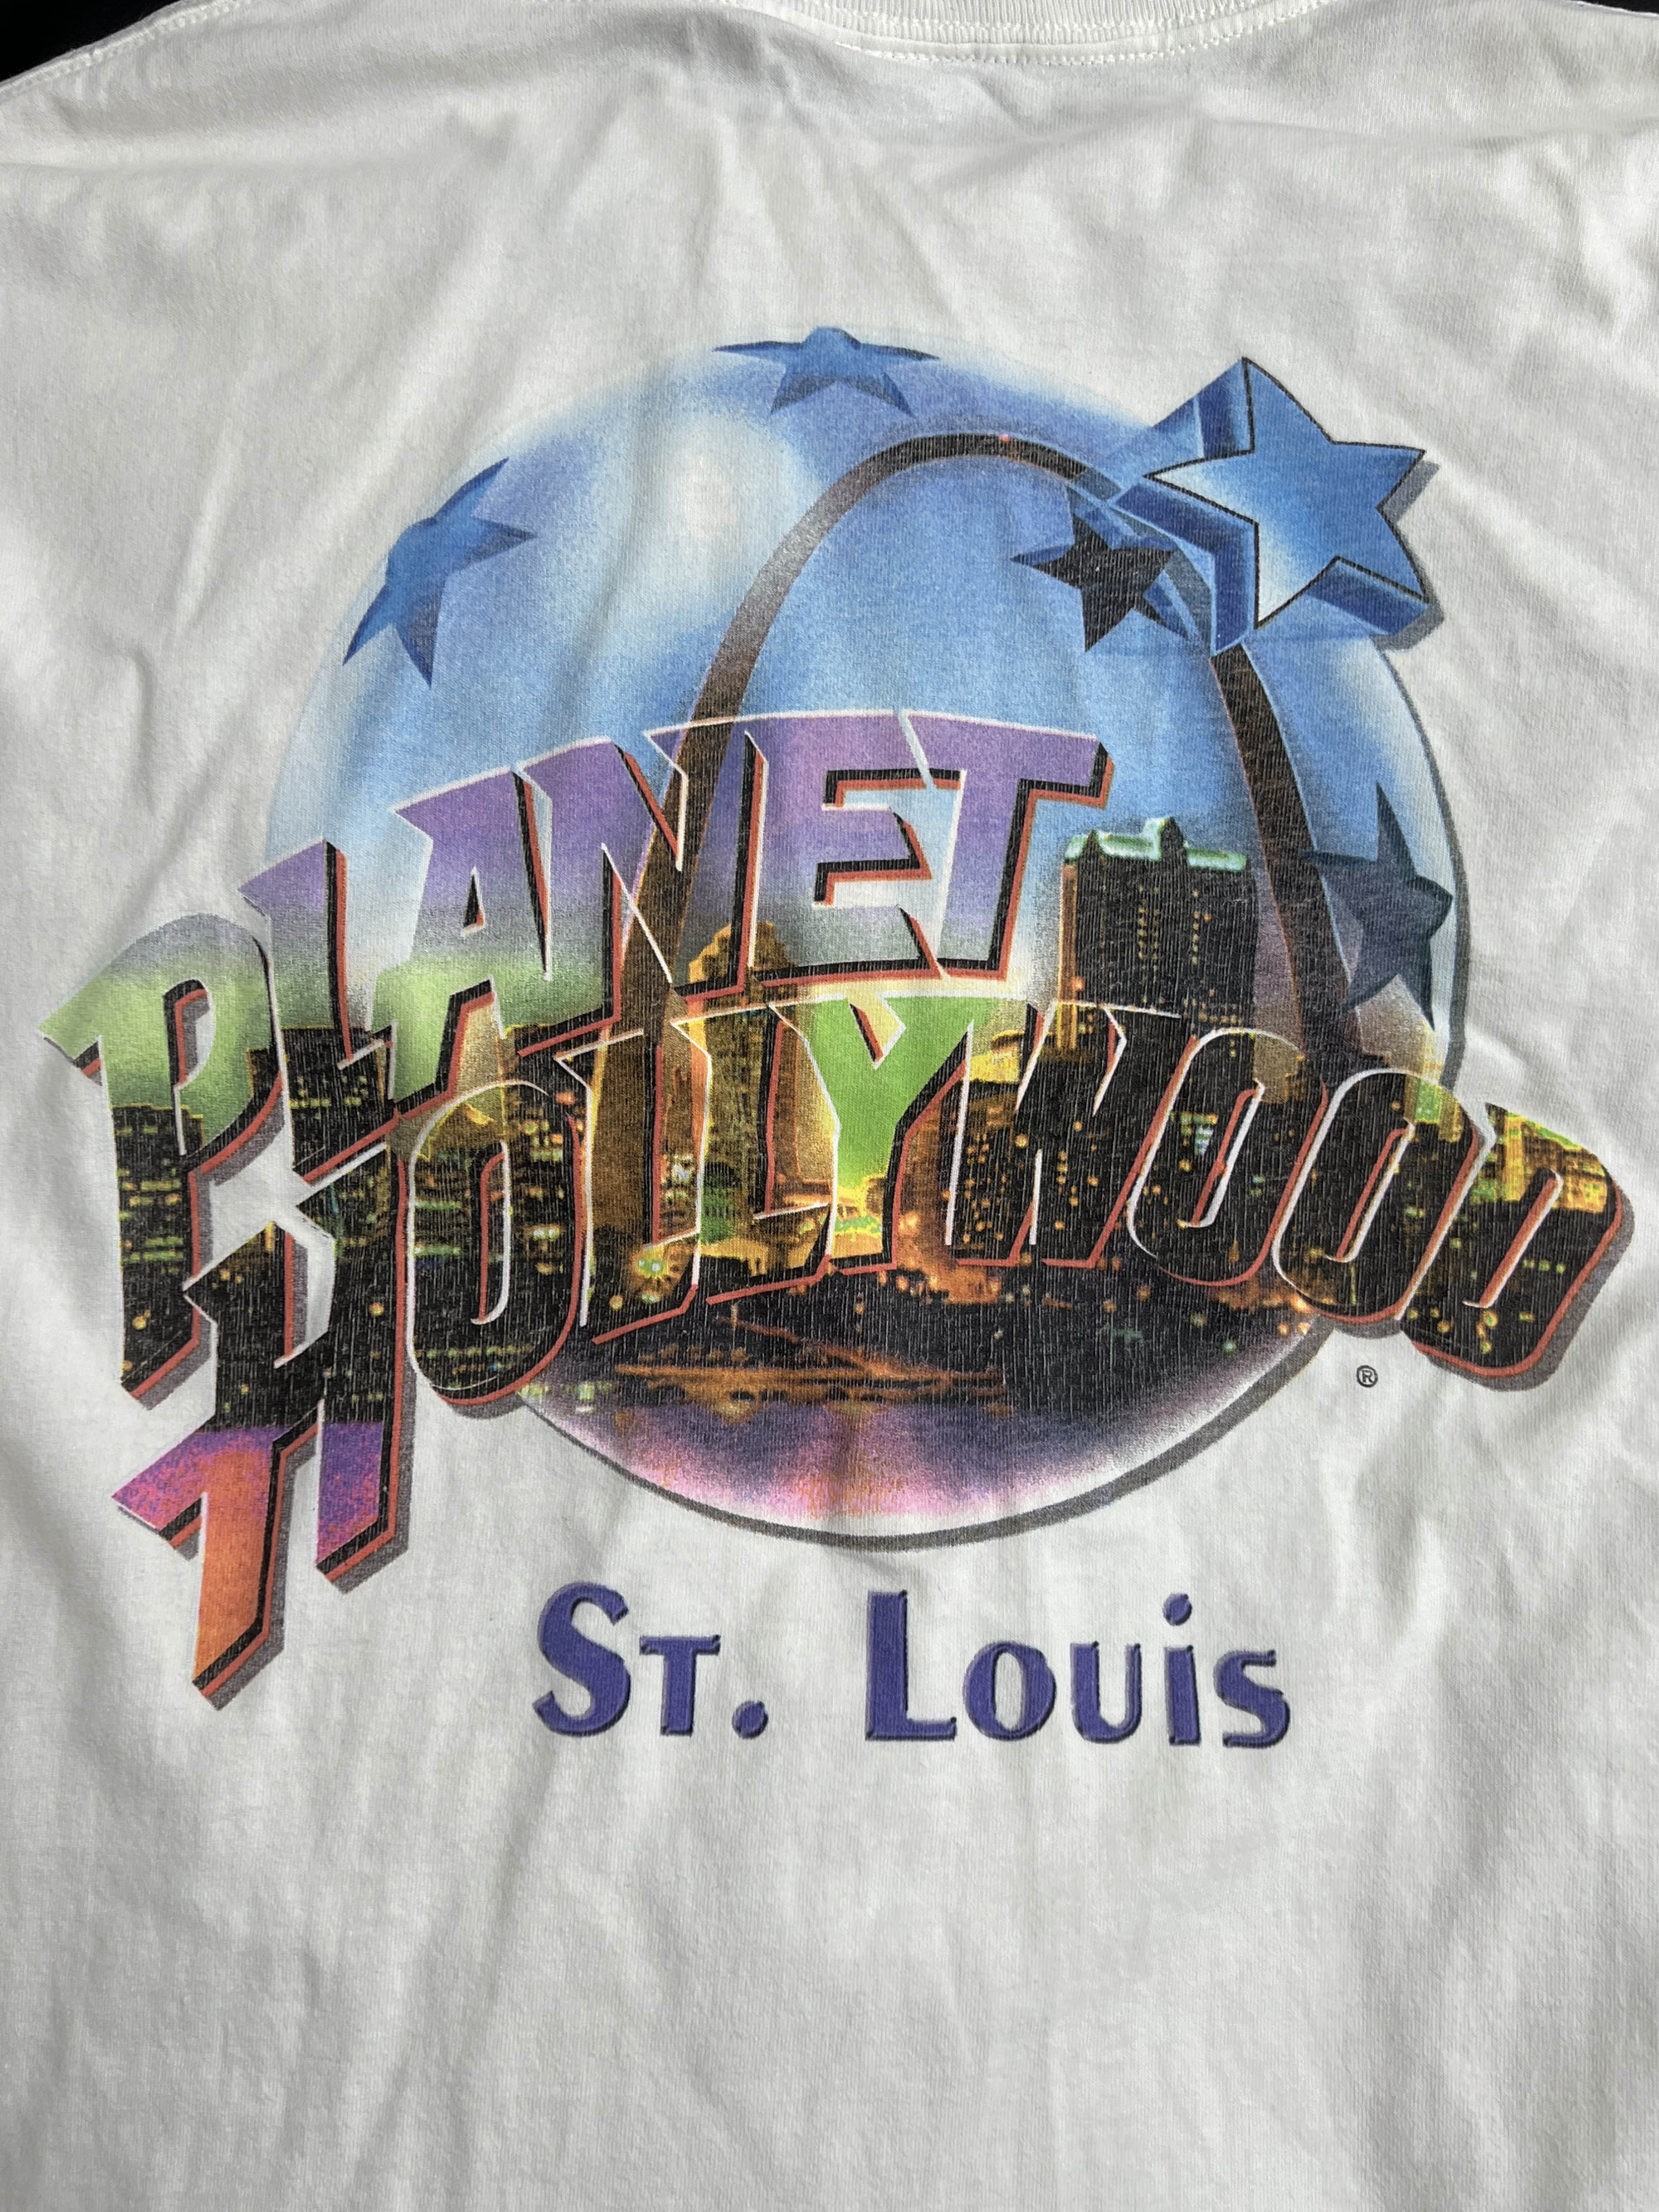 1991 PLANET HOLLYWOOD print t-shirts